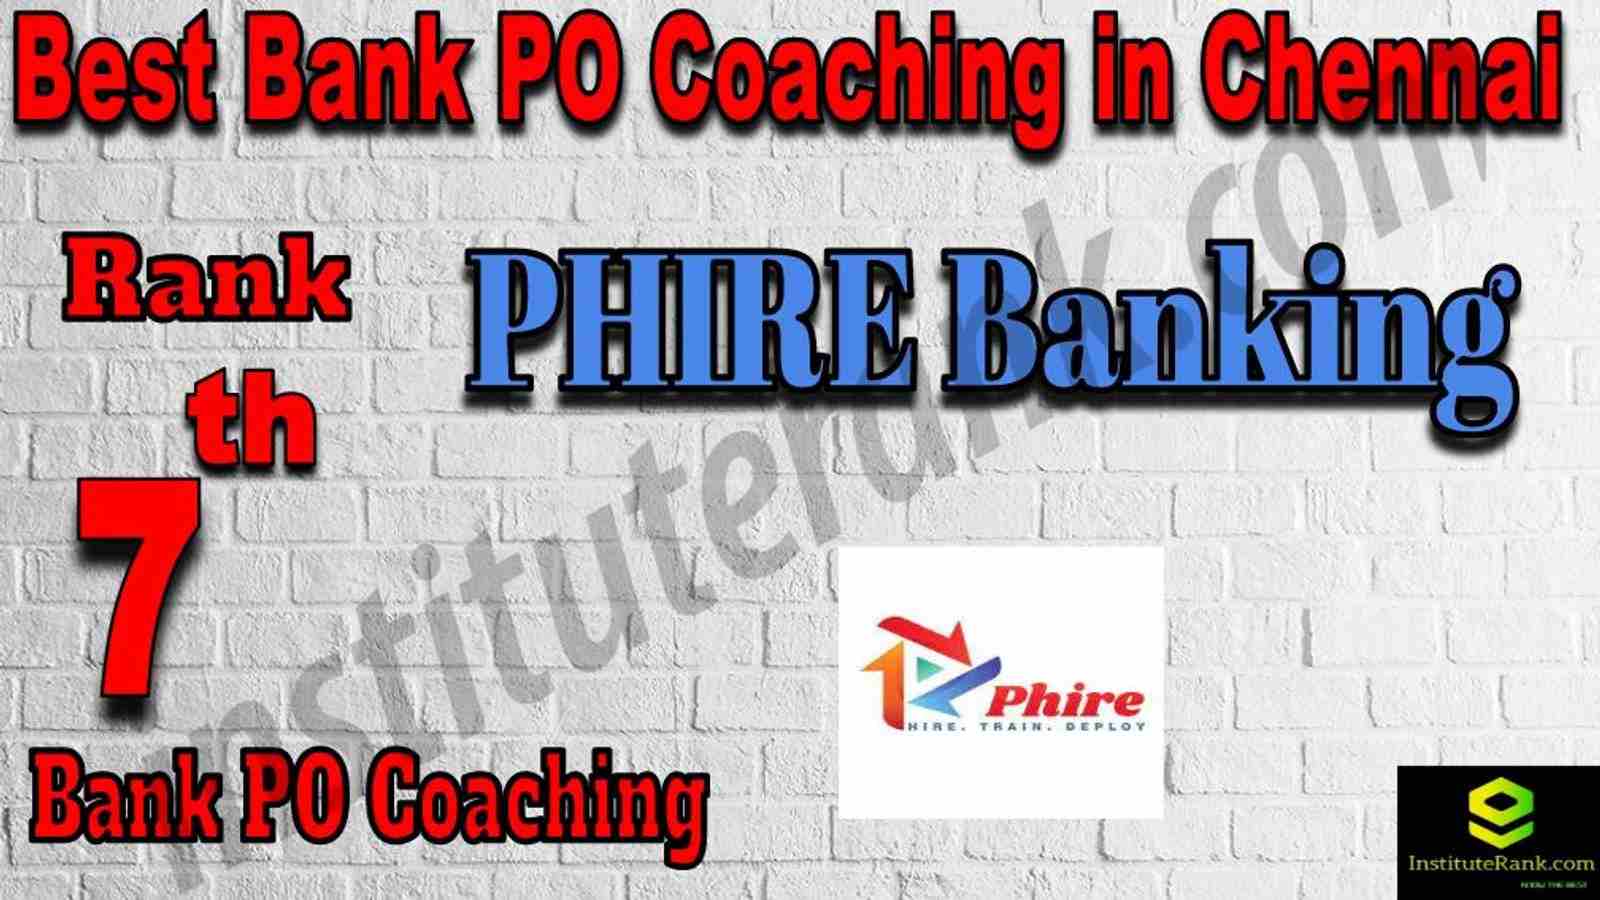 7th Best Bank PO Coaching in Chennai